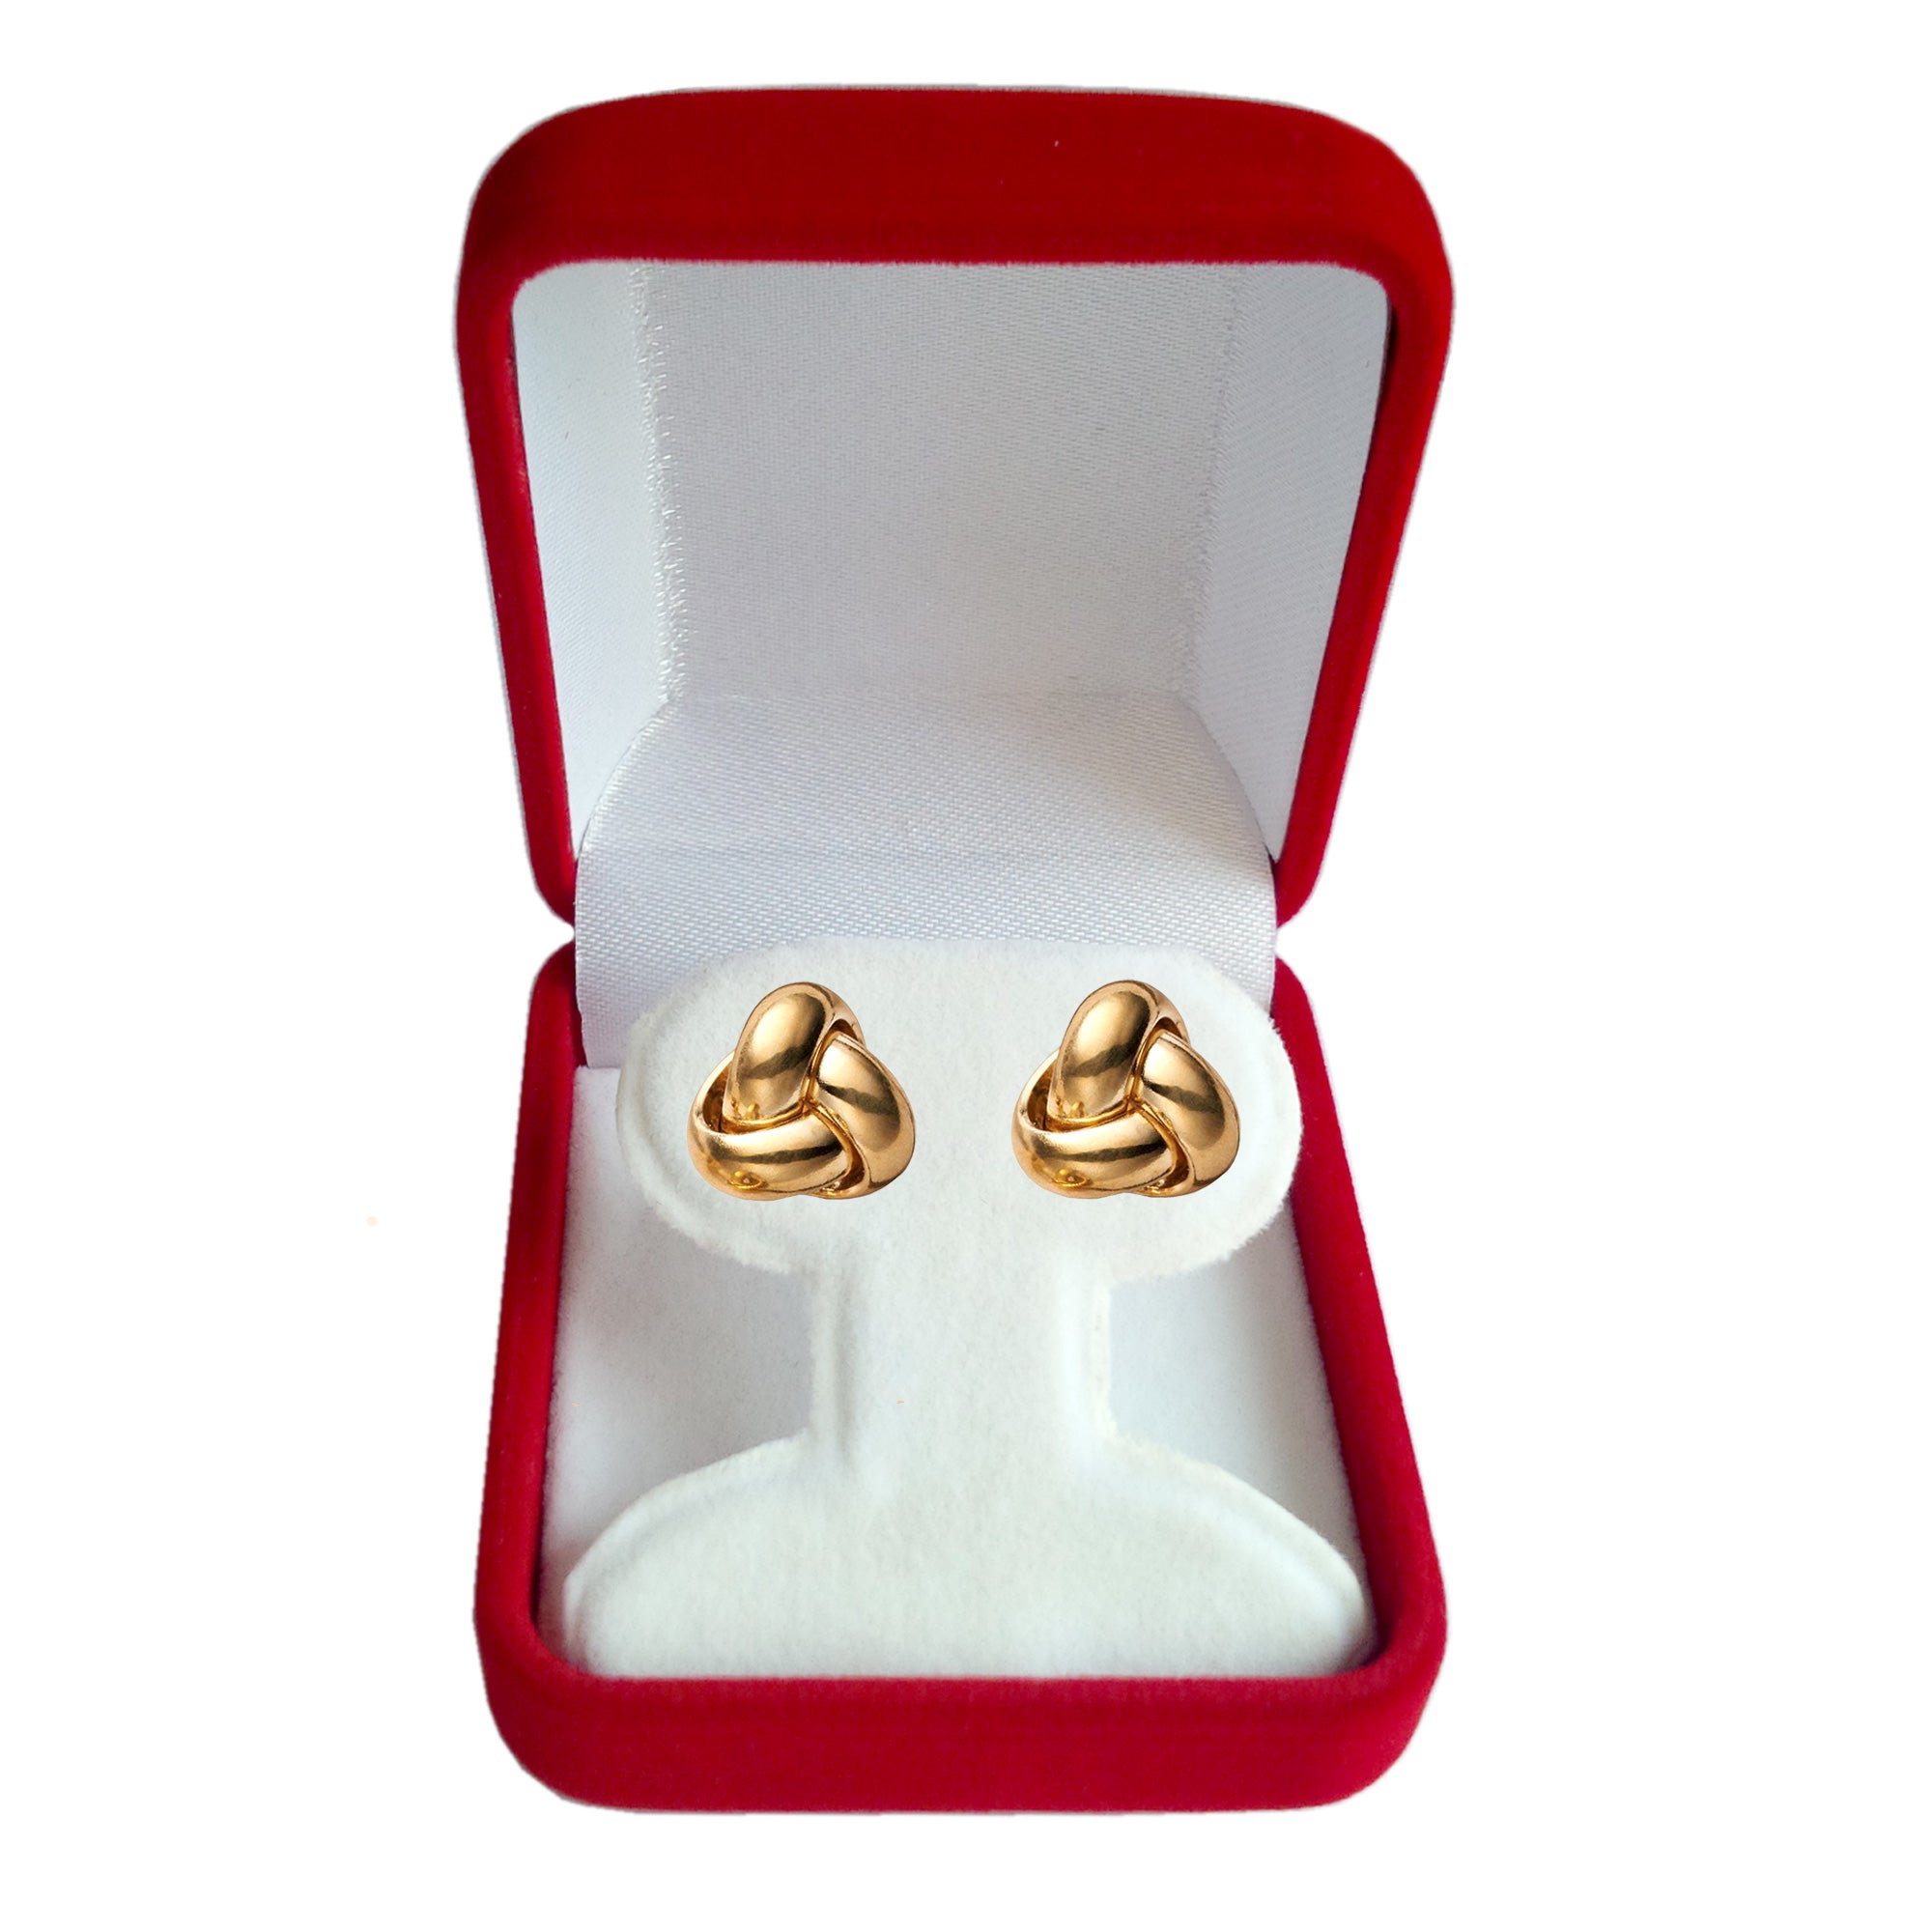 14k Yellow Gold Single Row Love Knot Stud Earrings, 9mm